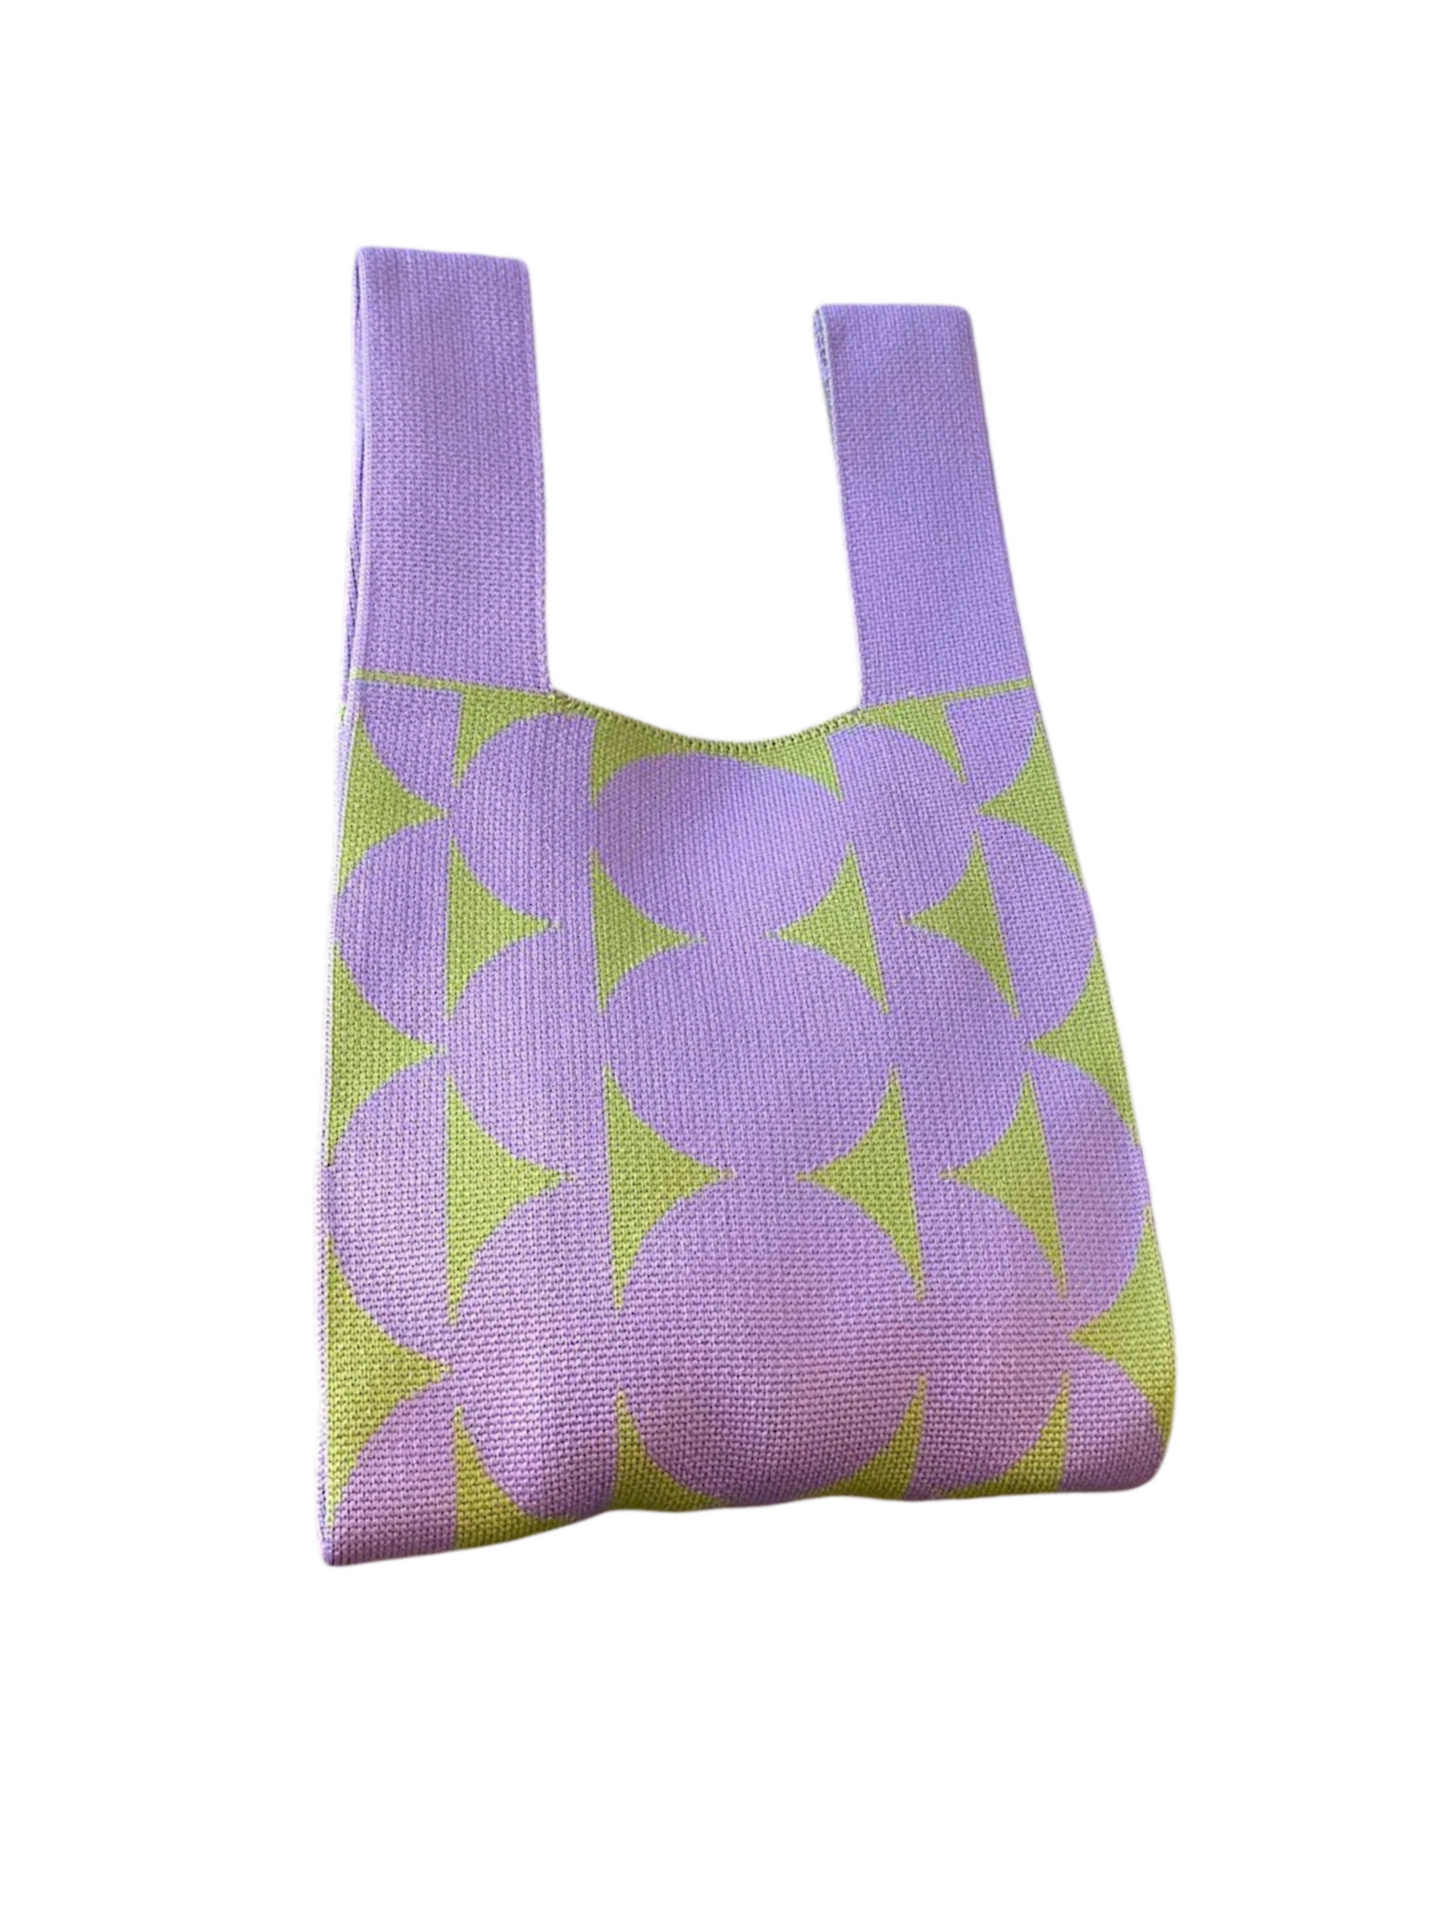 Handmade Knit tote bag